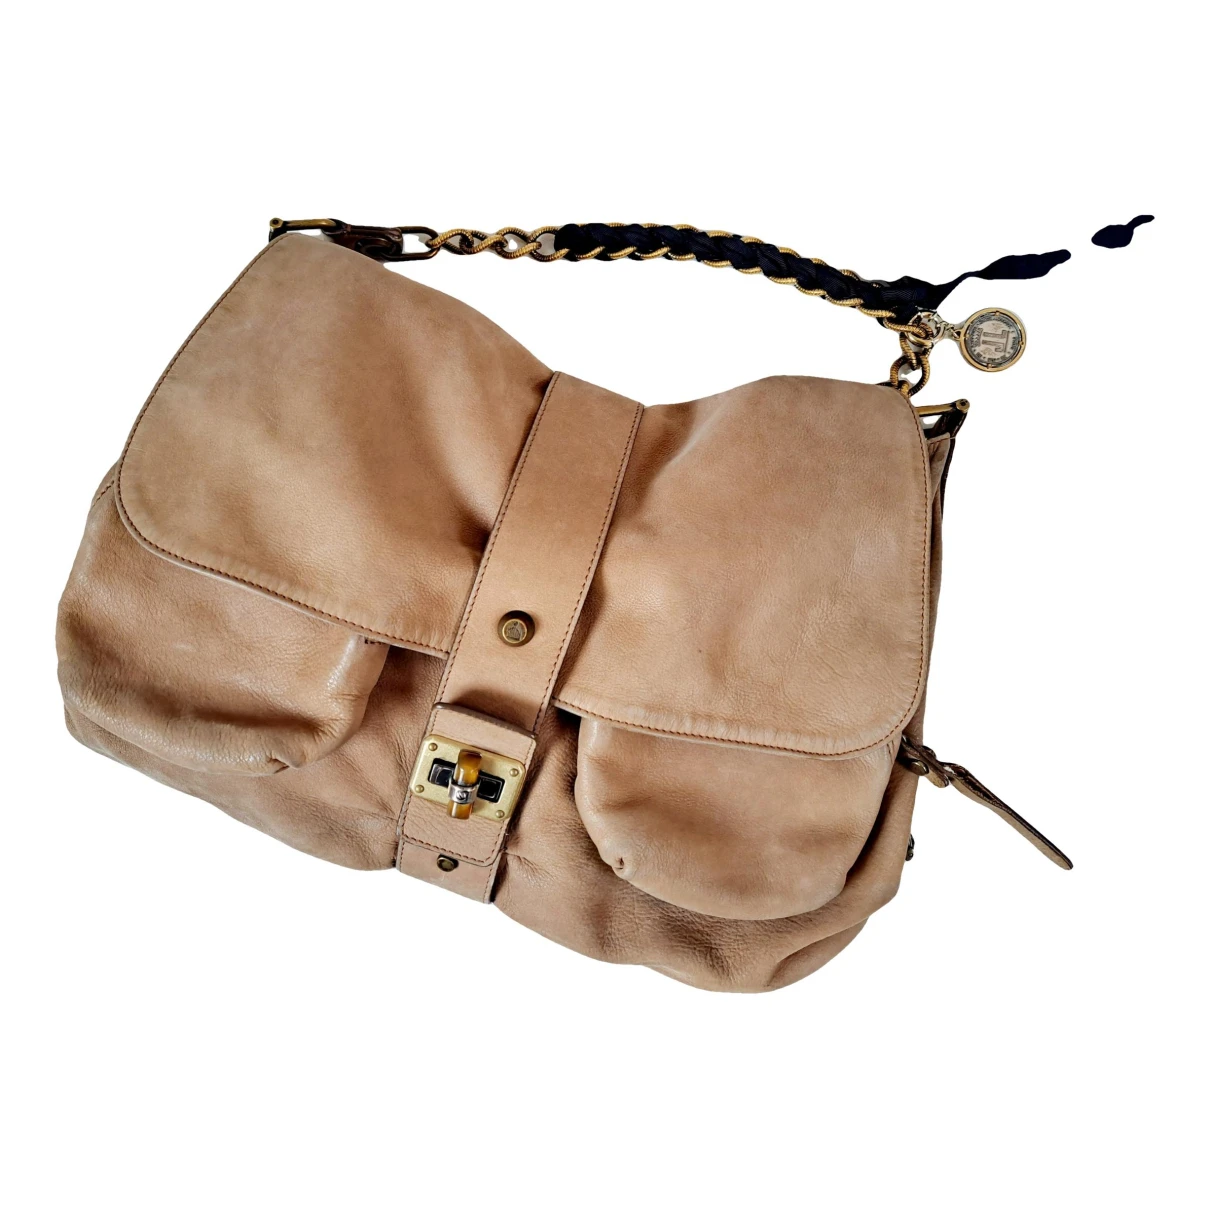 Pre-owned Lanvin Leather Handbag In Beige